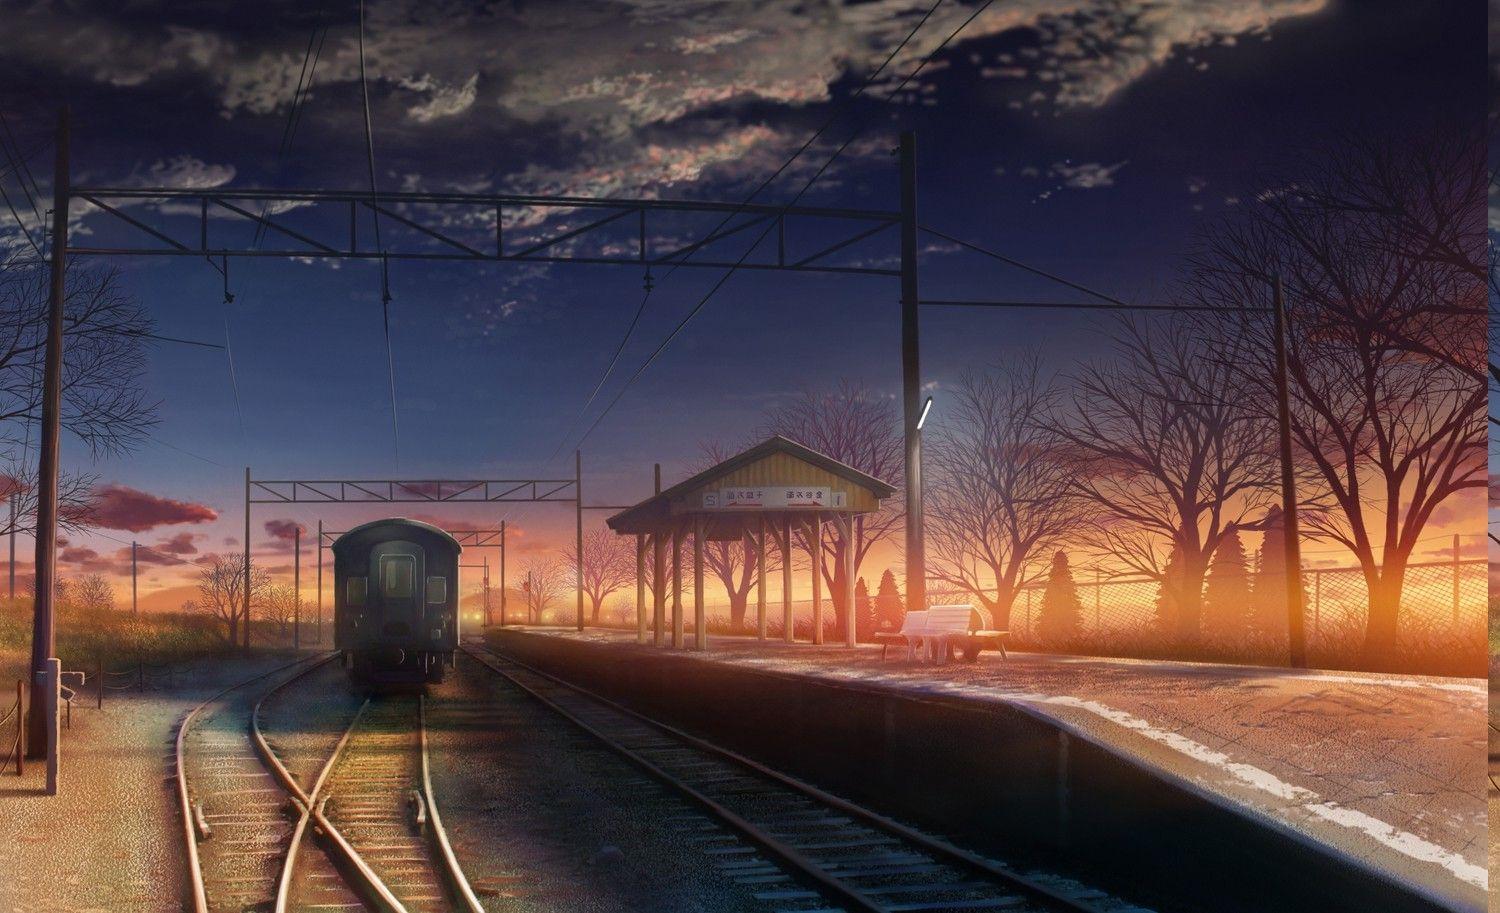 Anime Train Station 4k Ultra HD Wallpaper by Shijohane